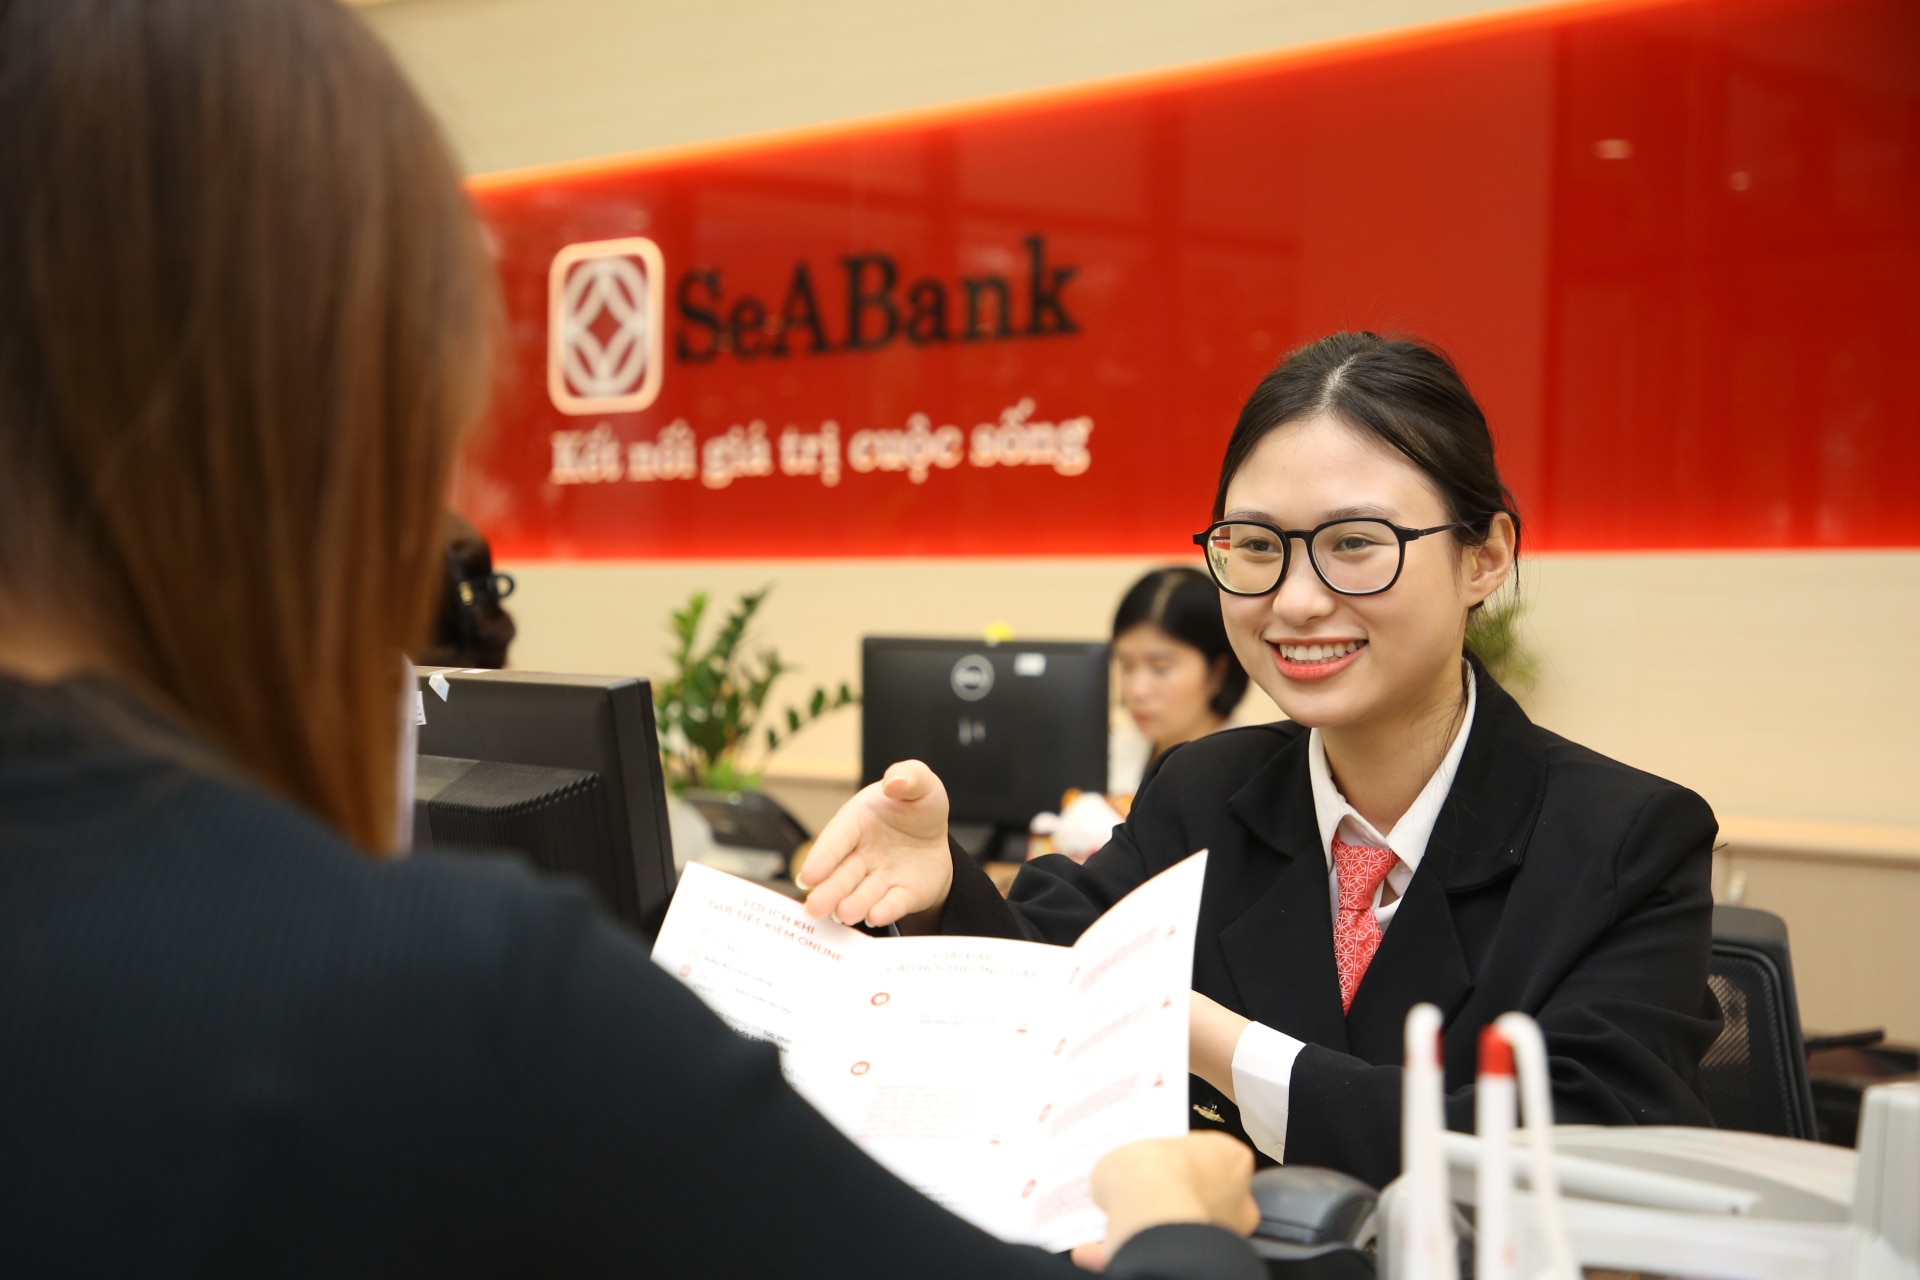 seabank duoc fortune vinh danh trong bang xep hang lan dau cong bo  fortune southeast asia 500 hinh 2